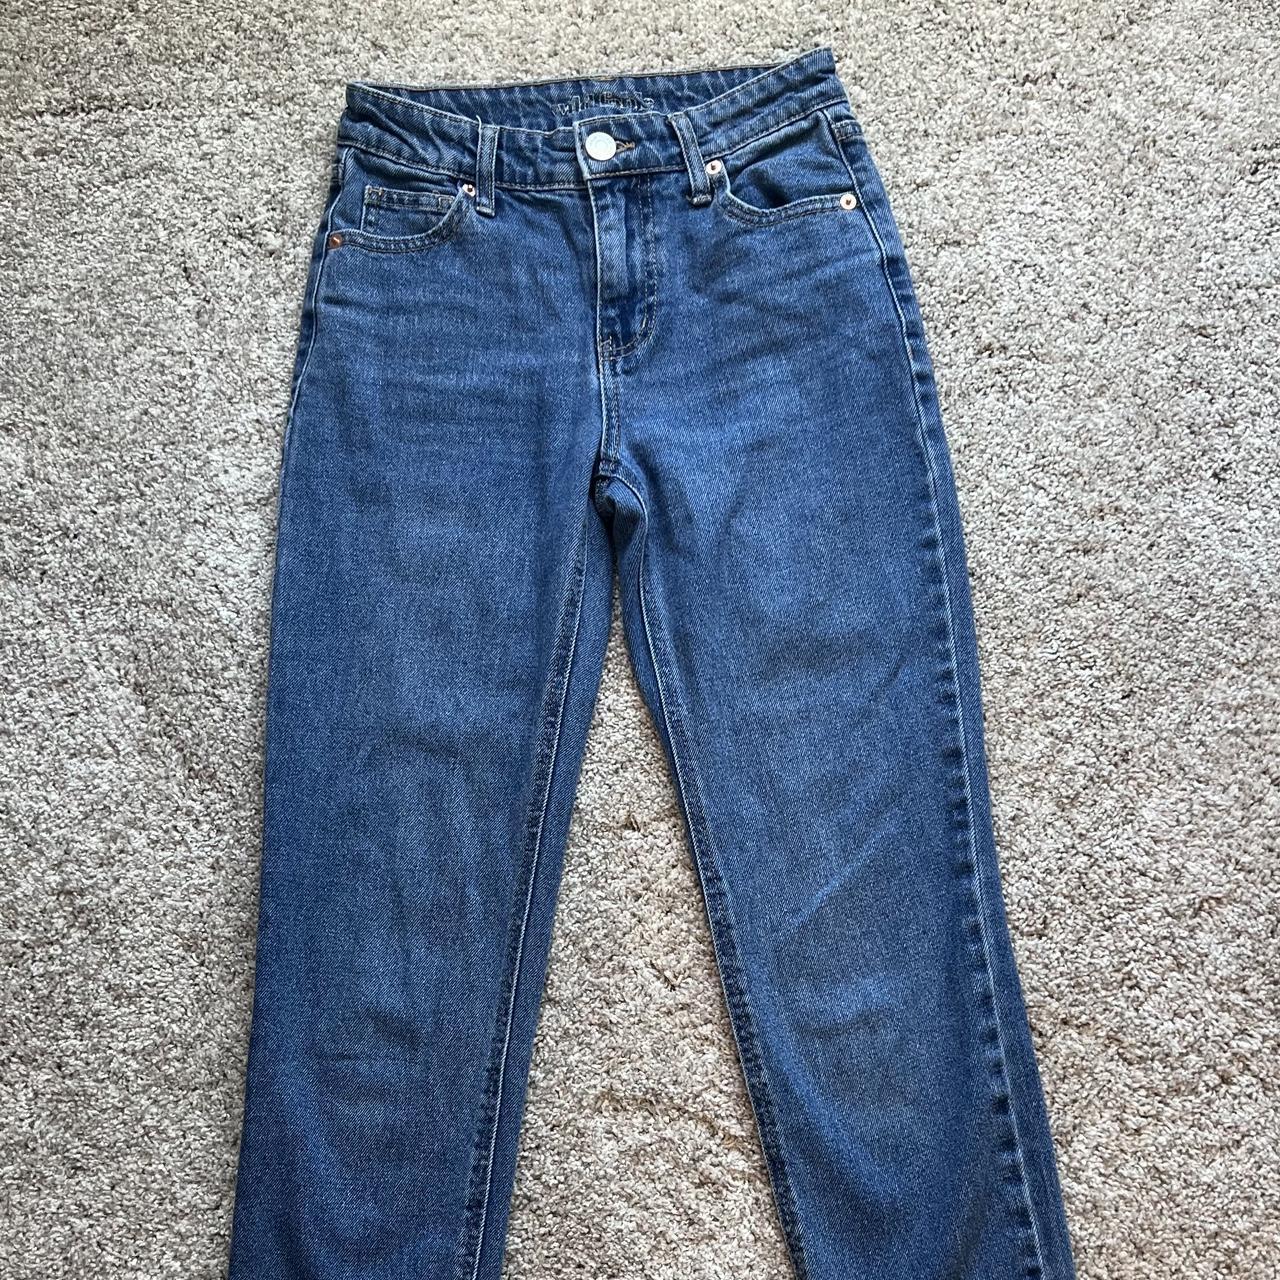 WILD FABLE Jeans: Size 00 - Depop